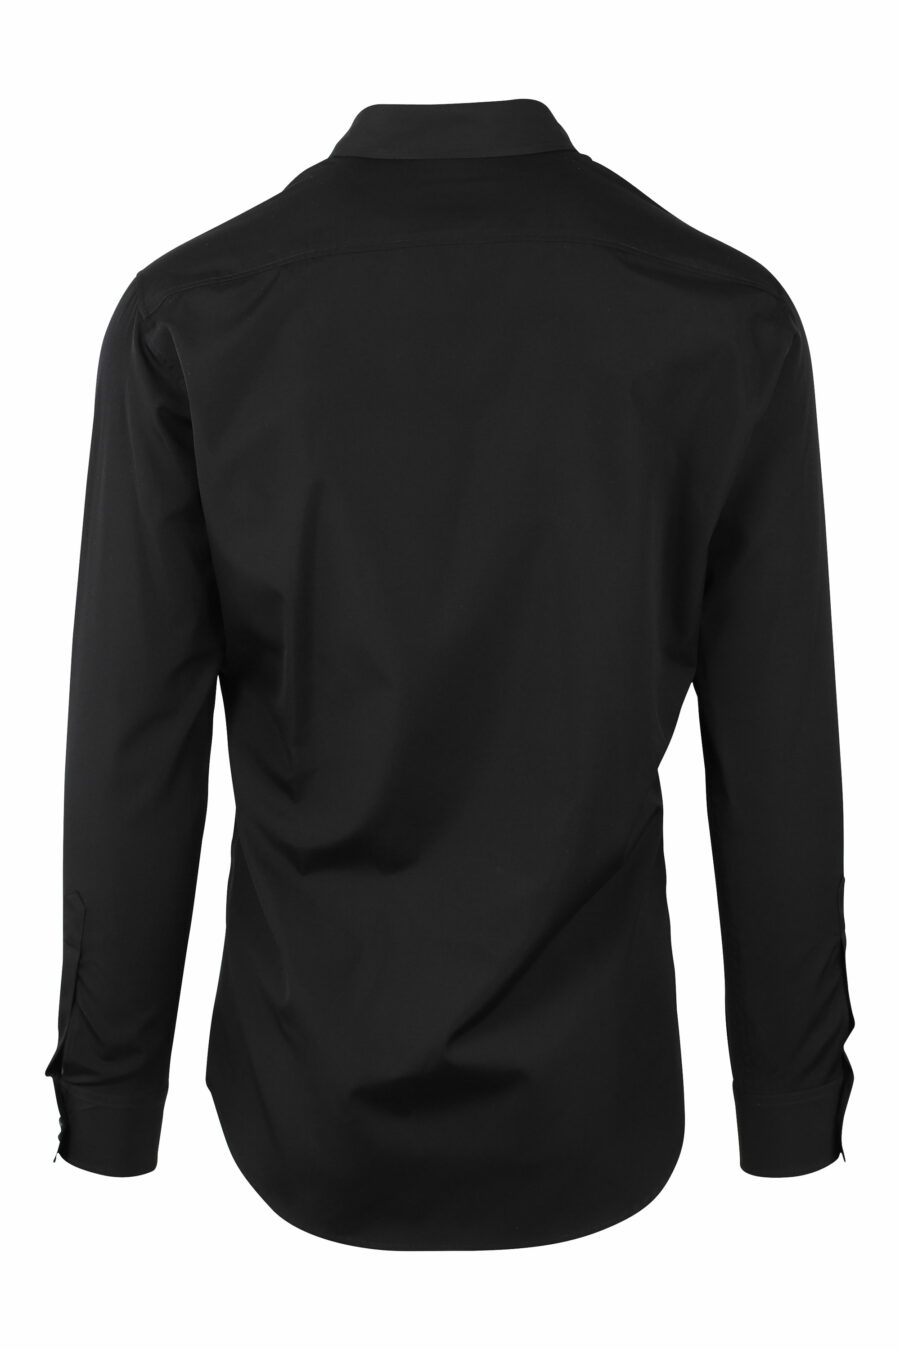 Camisa negra con minilogo cremallera - IMG 0774